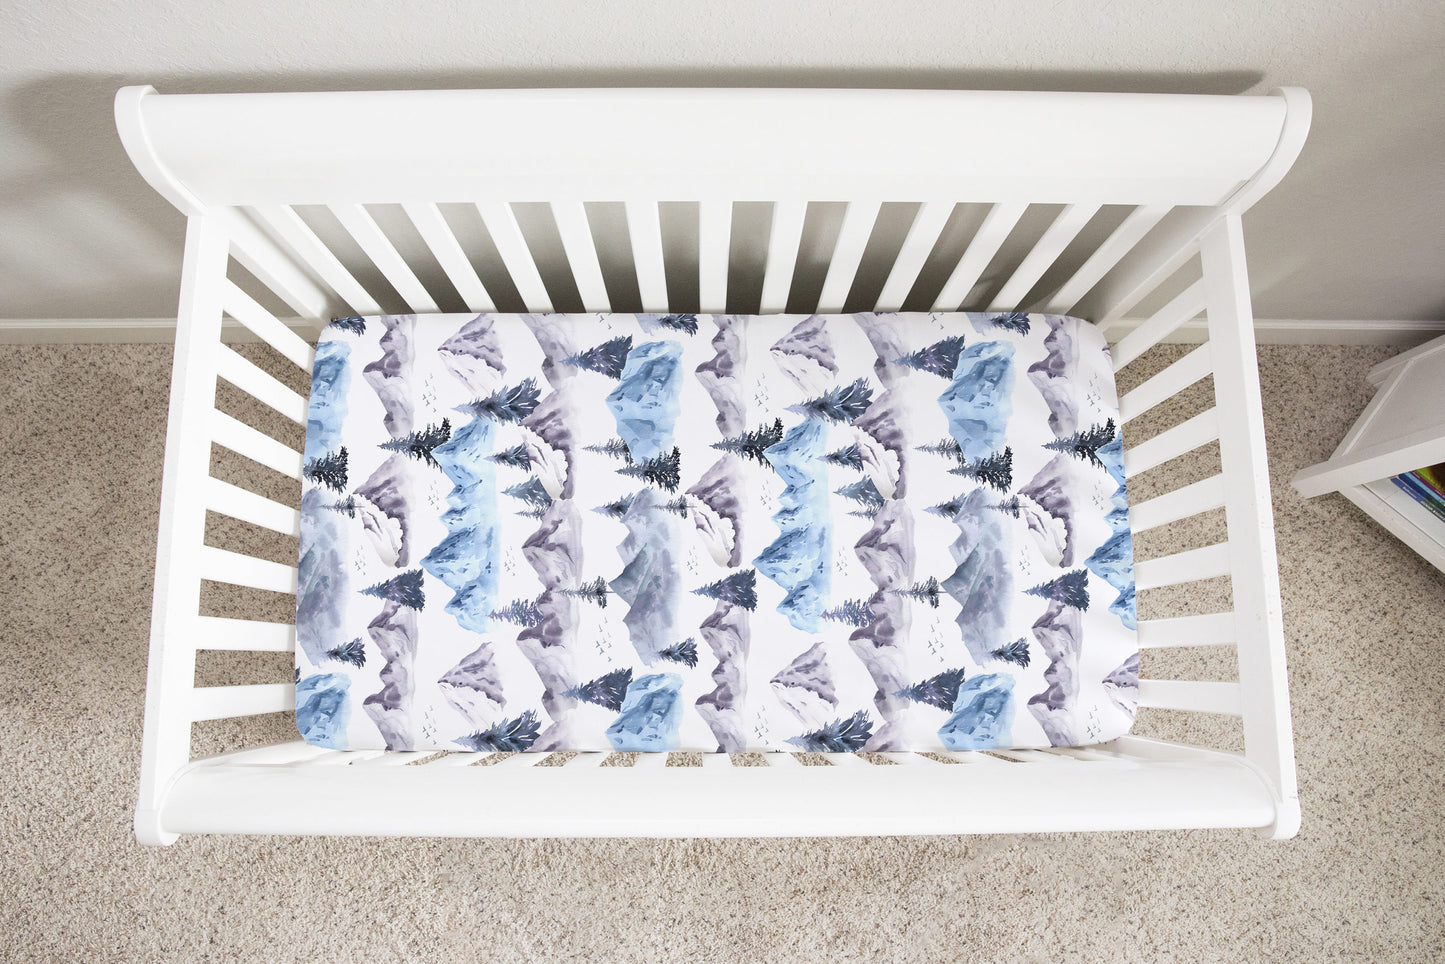 Blue Forest Crib Sheet, Mountains Nursery Bedding - Wild Blue